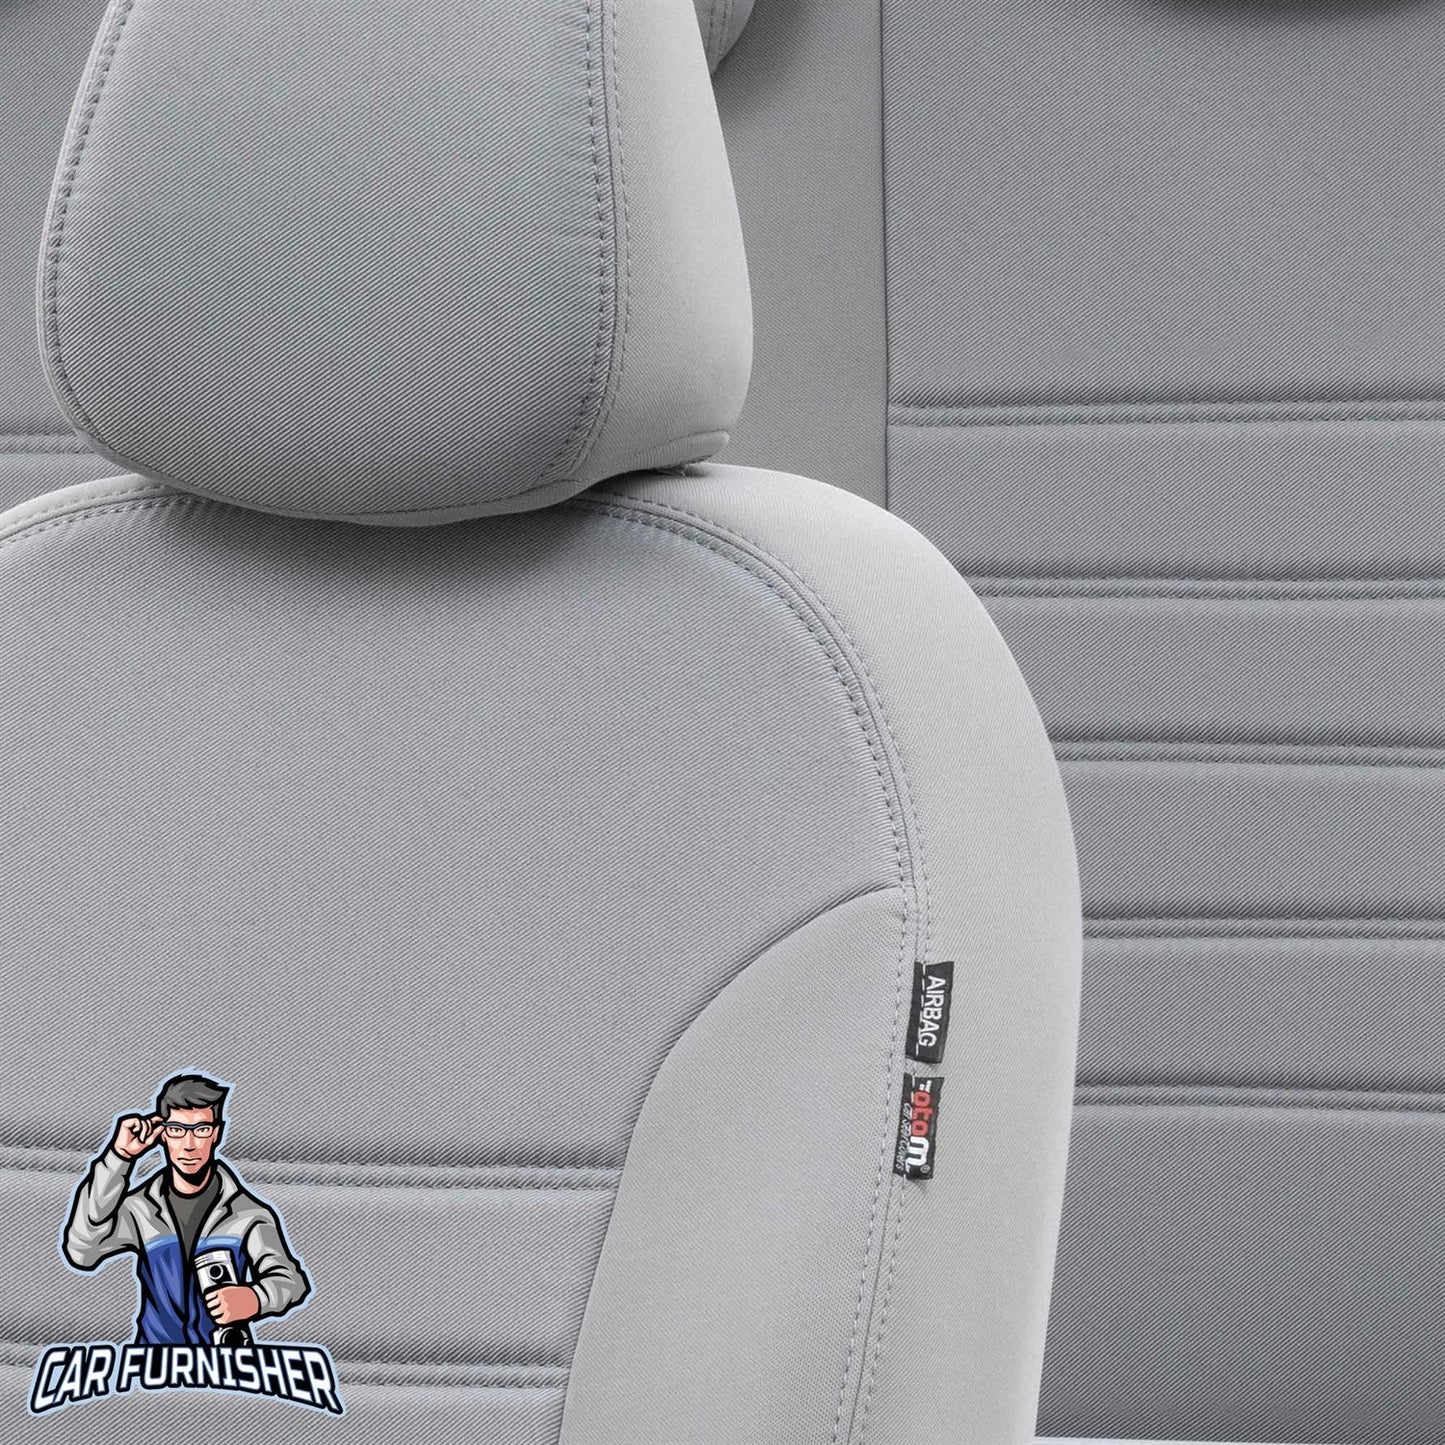 Tata Xenon Seat Covers Original Jacquard Design Light Gray Jacquard Fabric